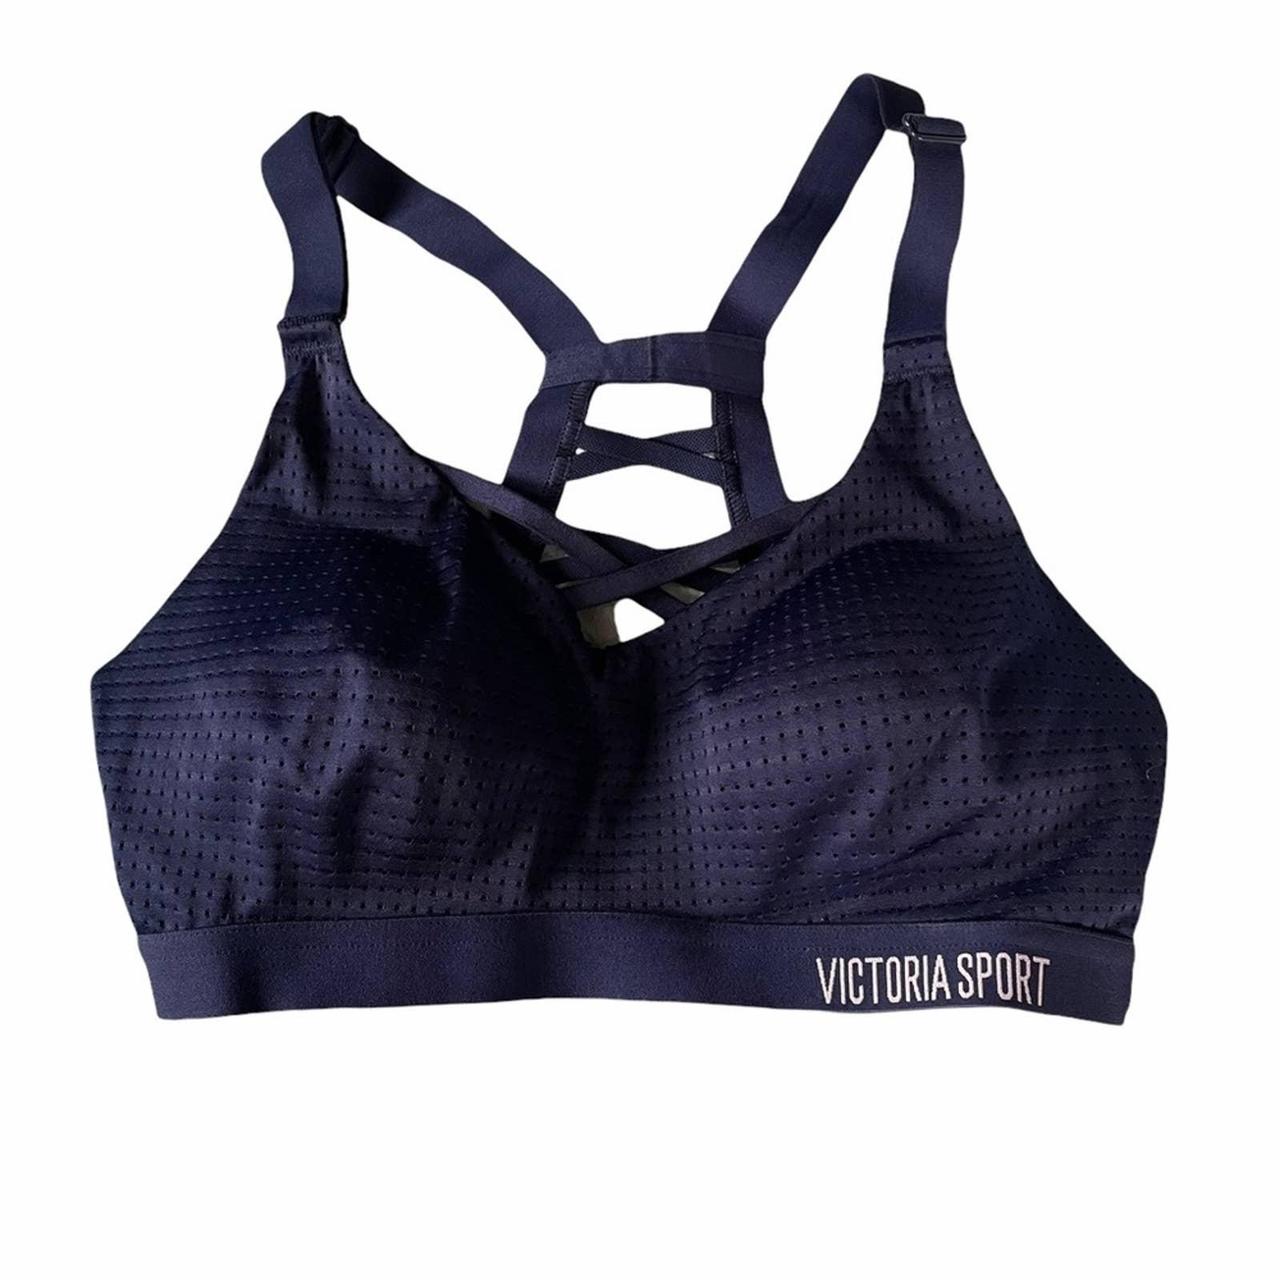 Victoria's Secret Victoria Sport blue sports bra